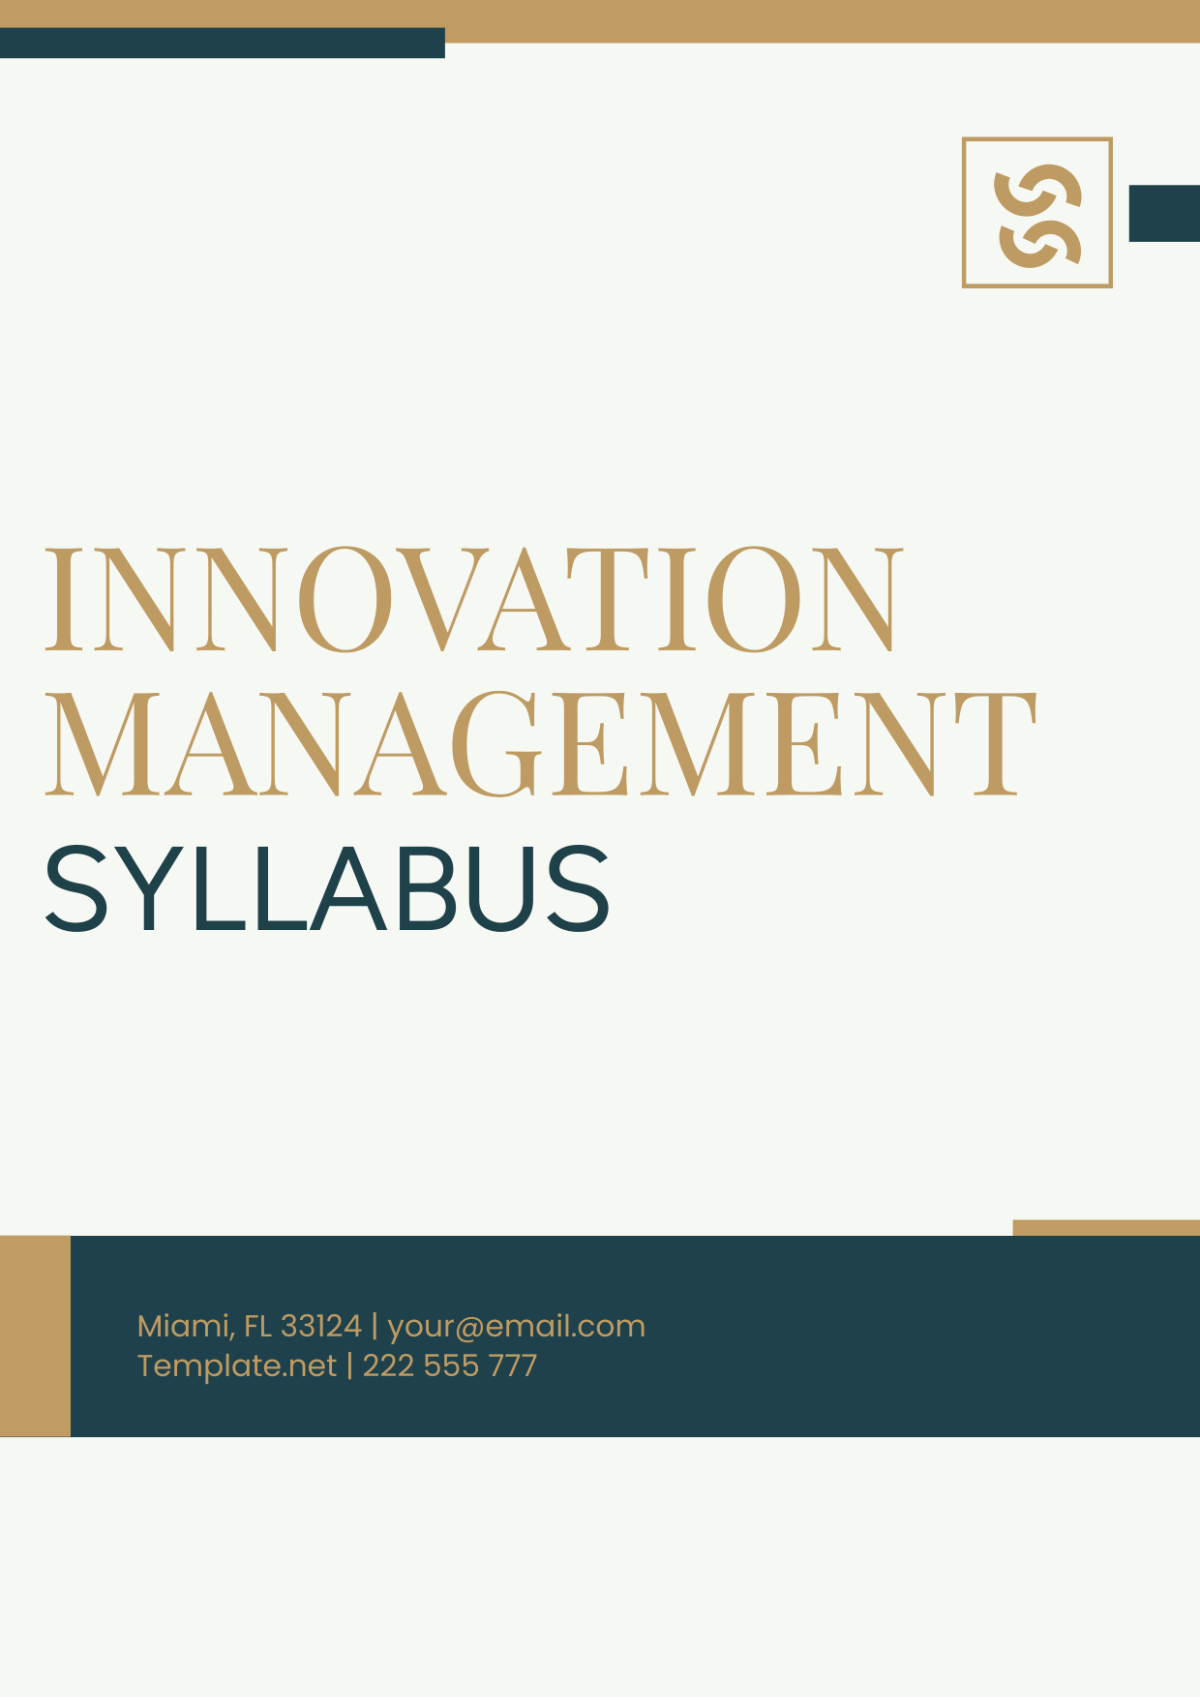 Innovation Management Syllabus Template